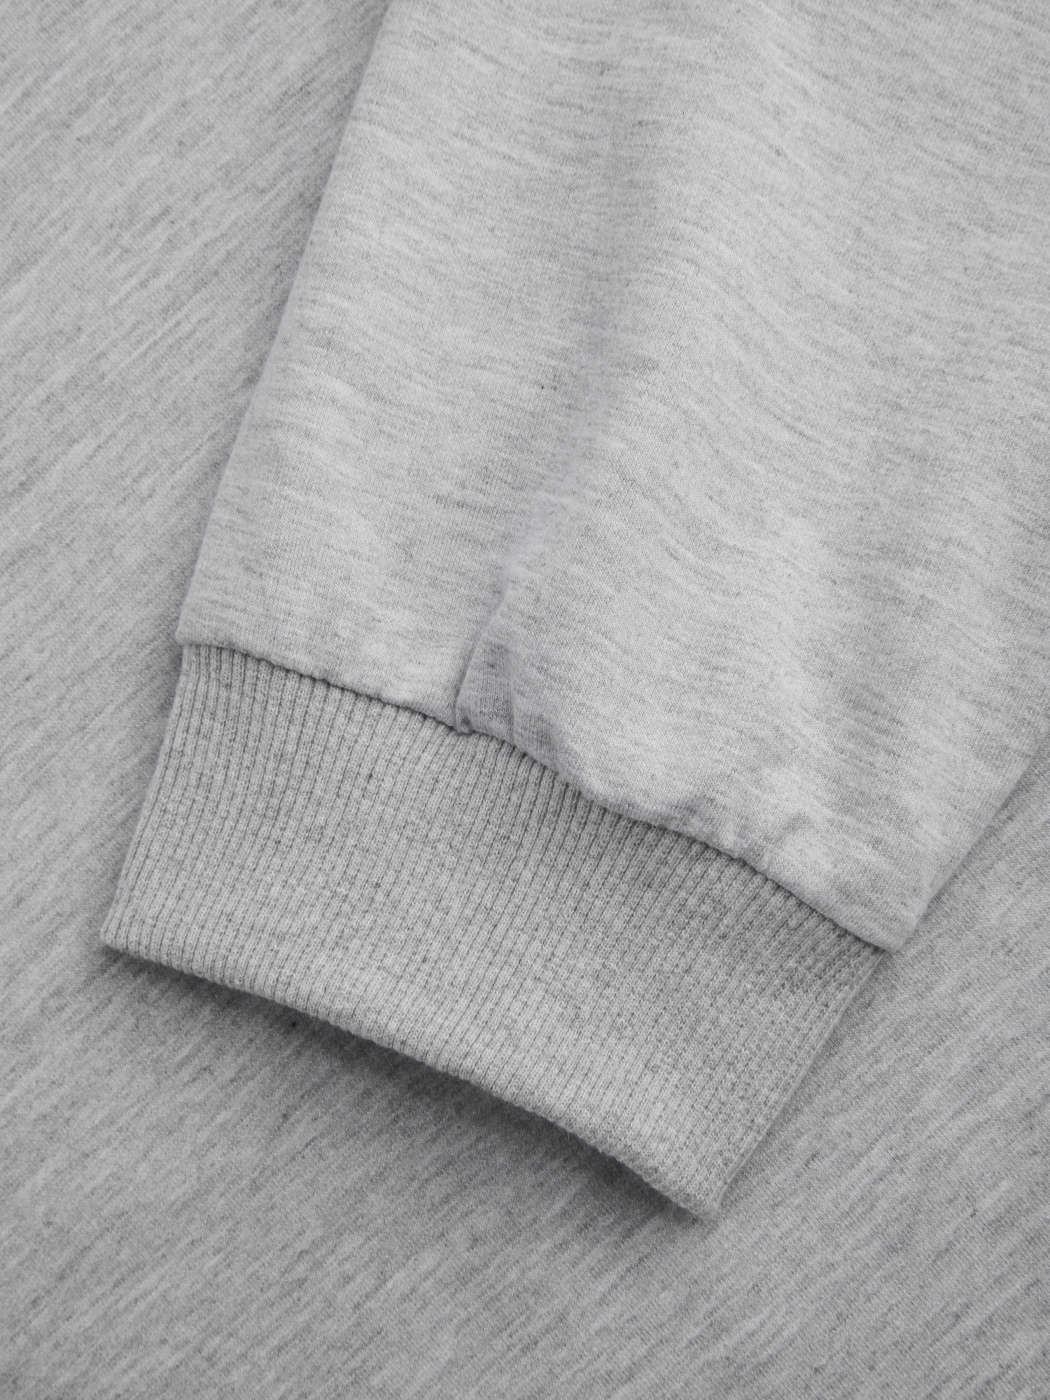 Oversized Sweatshirts Women Loose Fit Los Angeles Print Sweatshirt Crew  Neck Casual Pullover Sweat Tops QIFEN, C-wine, XL price in Saudi Arabia,  Saudi Arabia